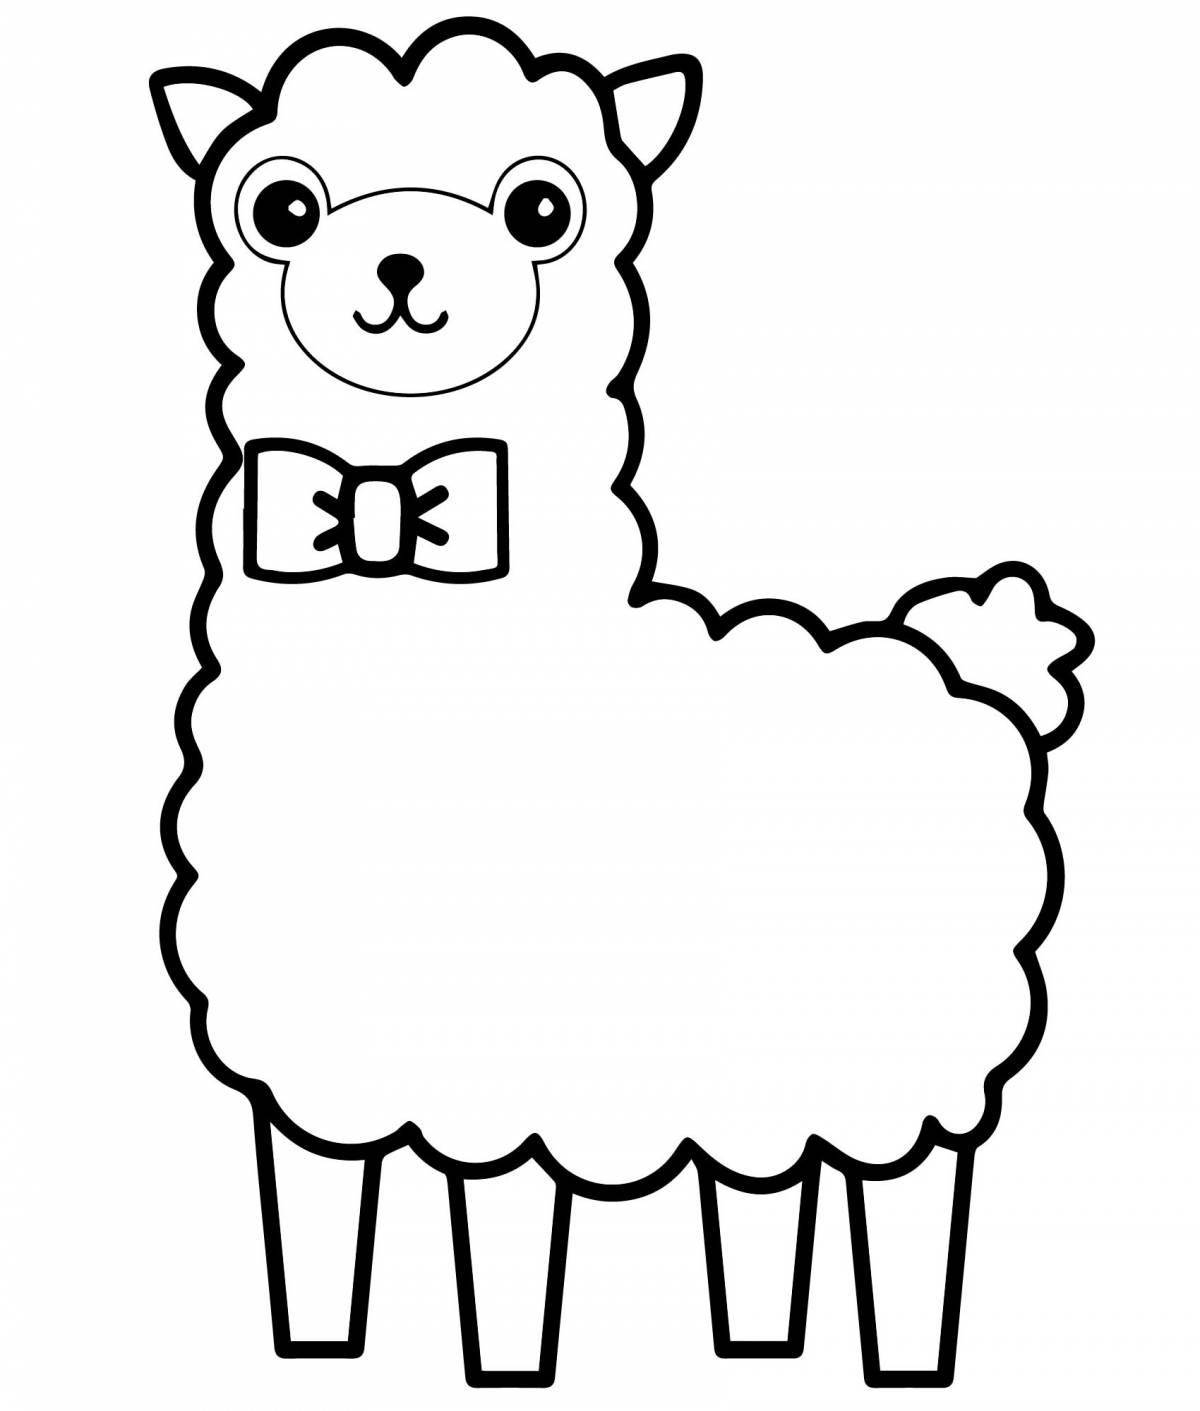 Llama for kids #7